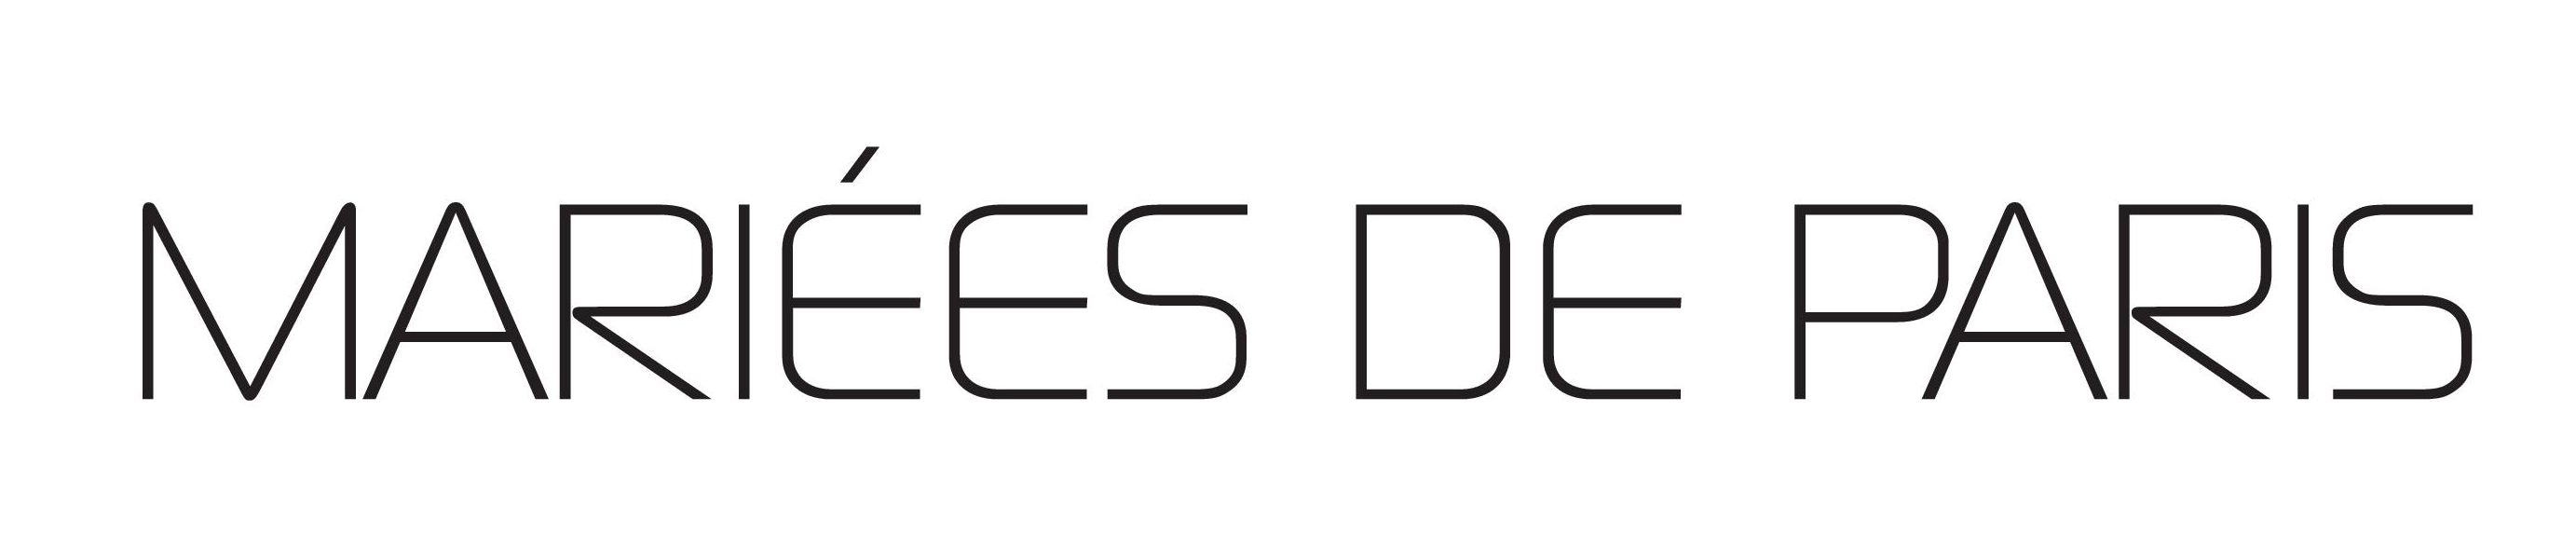 logo de la marque de robes de mariée Mariées de Paris